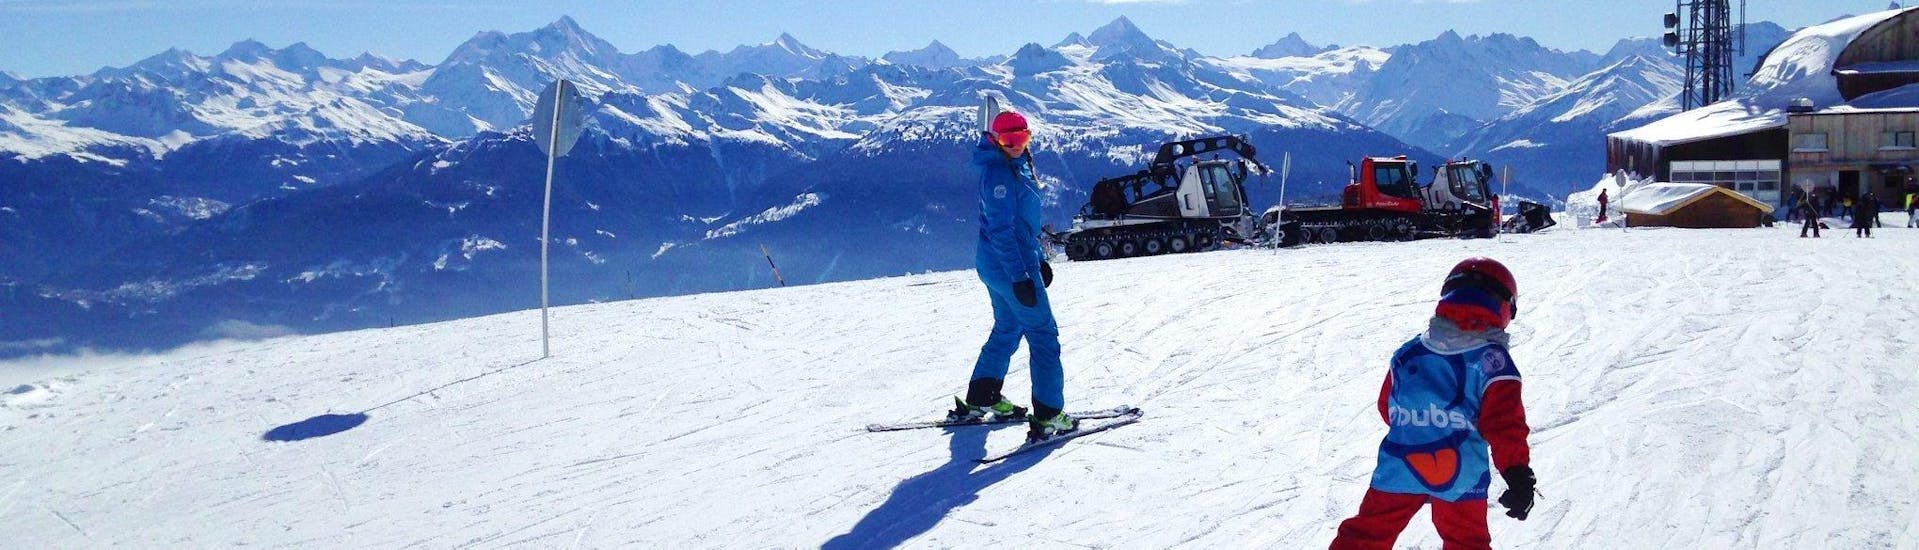 private-ski-lessons-for-kids-holidays-esi-glycerine-anzere-hero